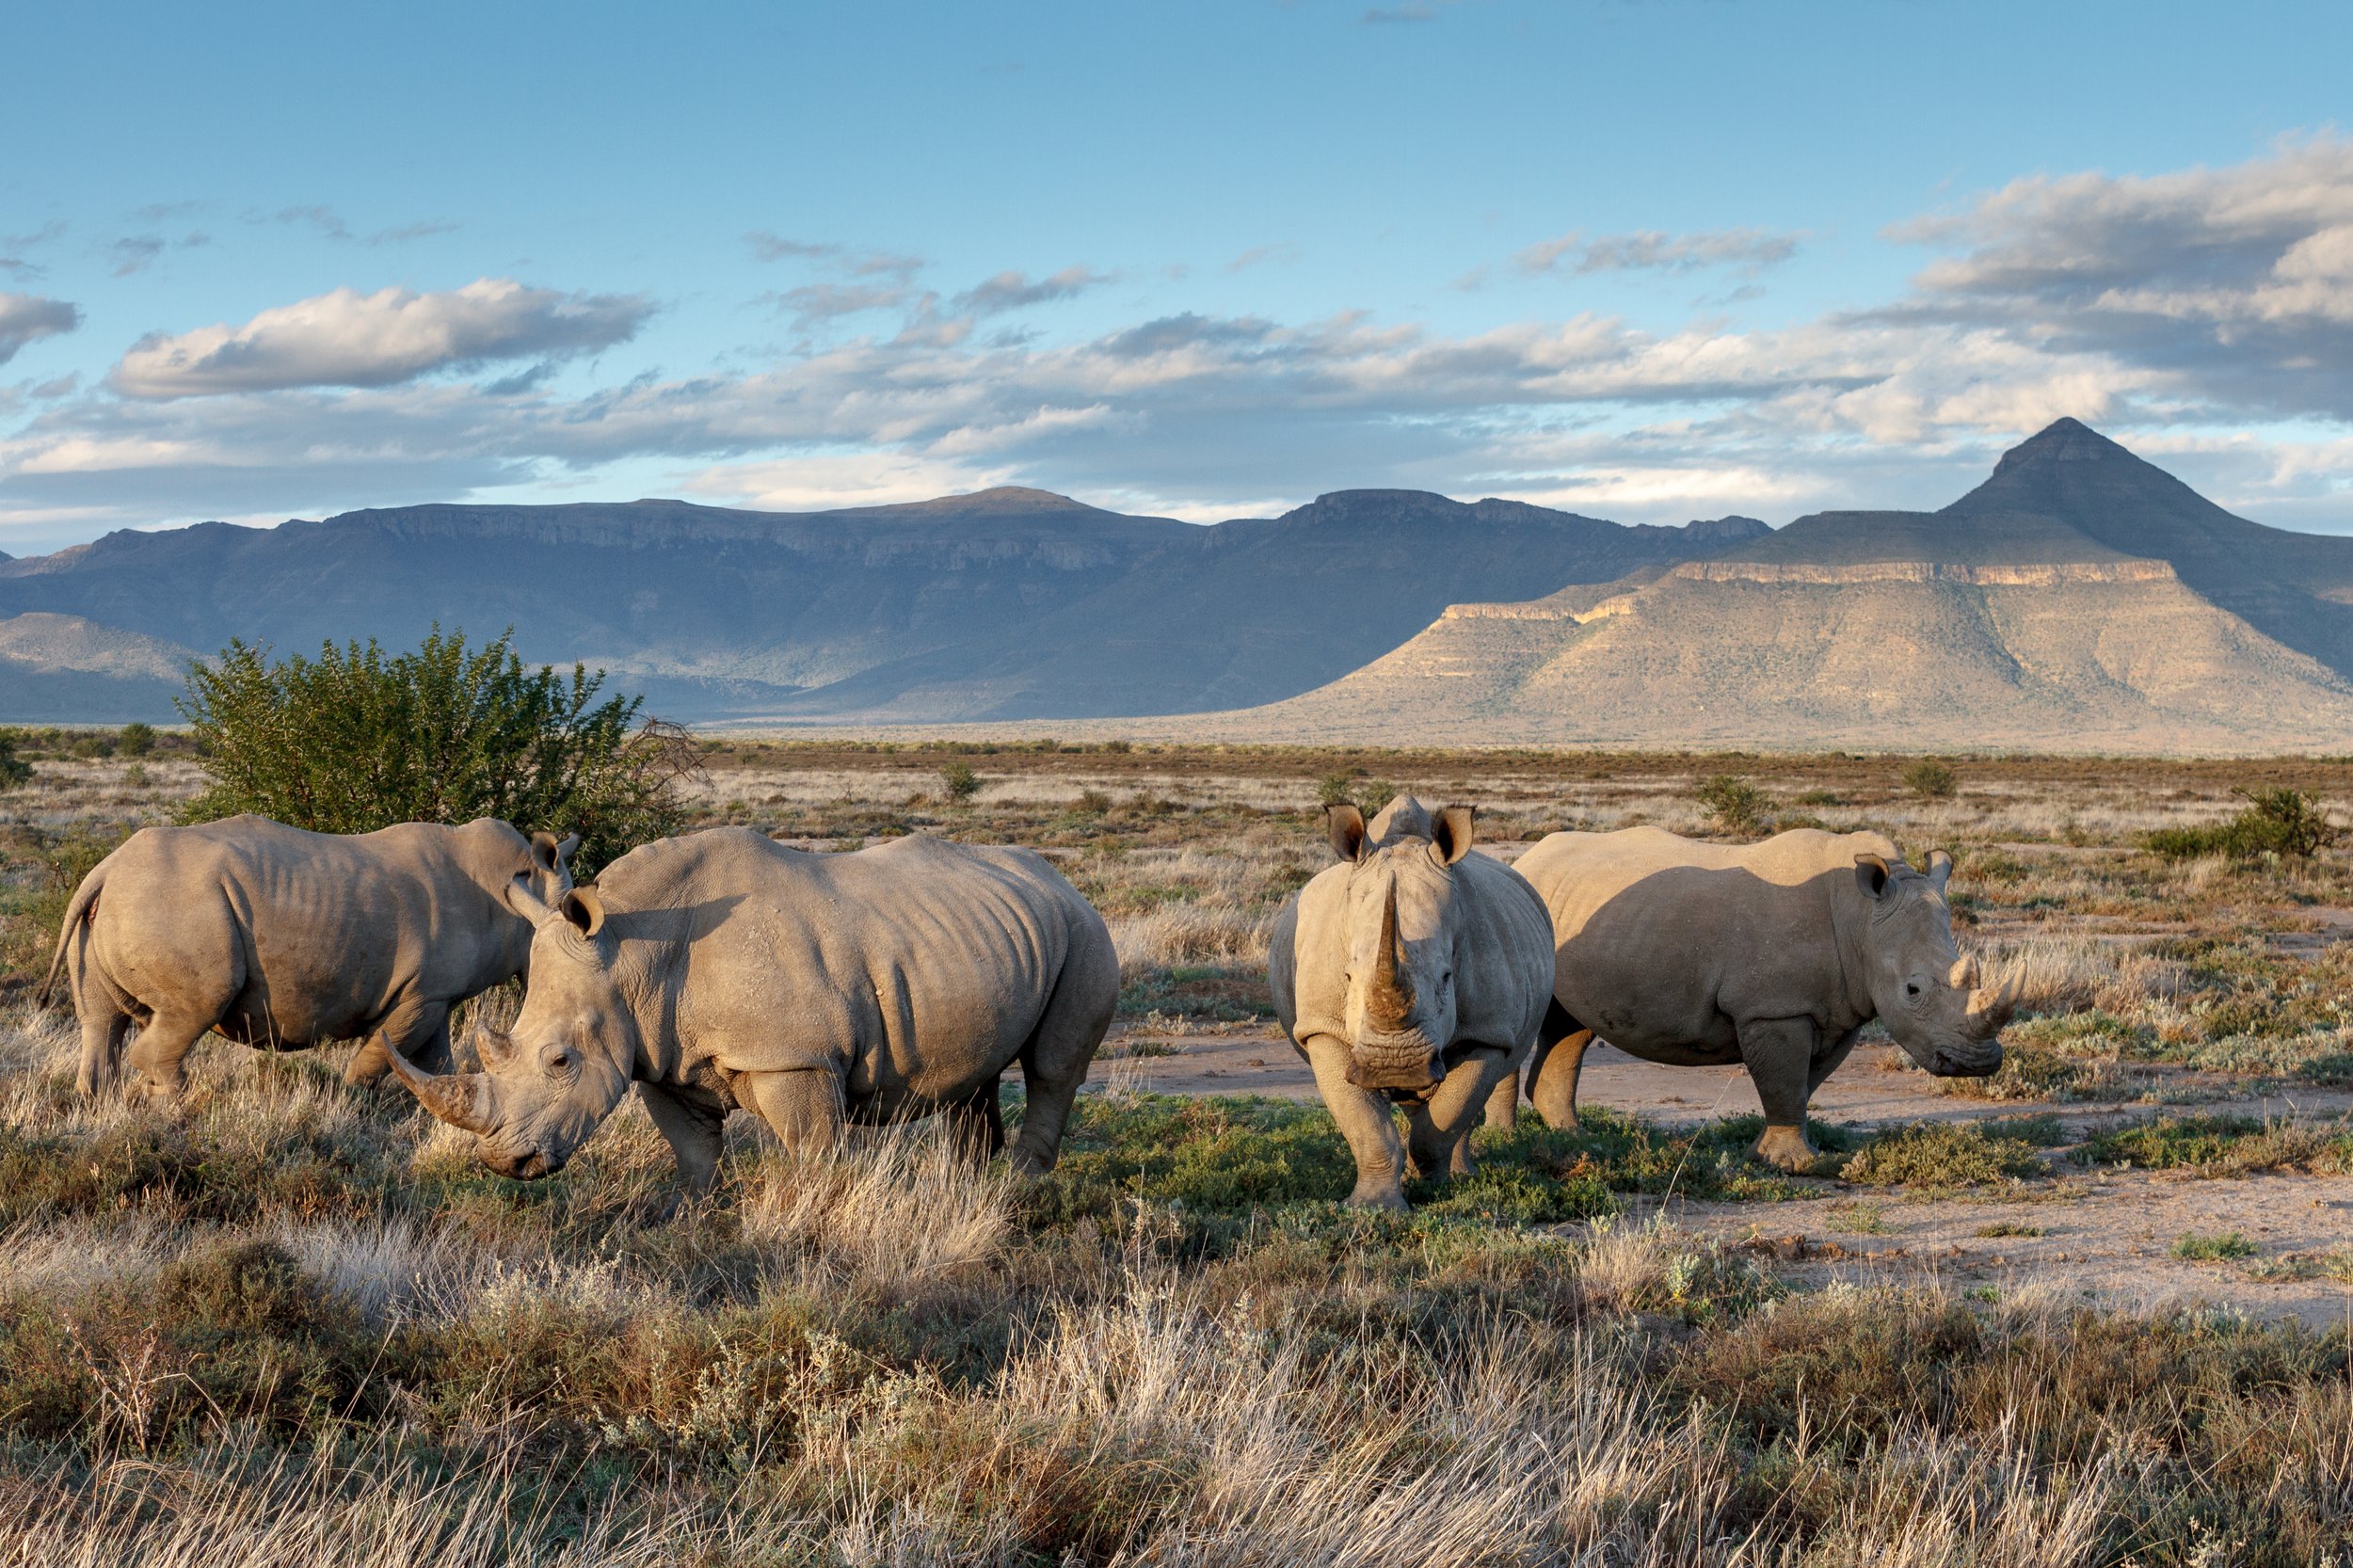 Copy of Copy of White rhinos. Samara Copyright Mitch Reardon.jpg